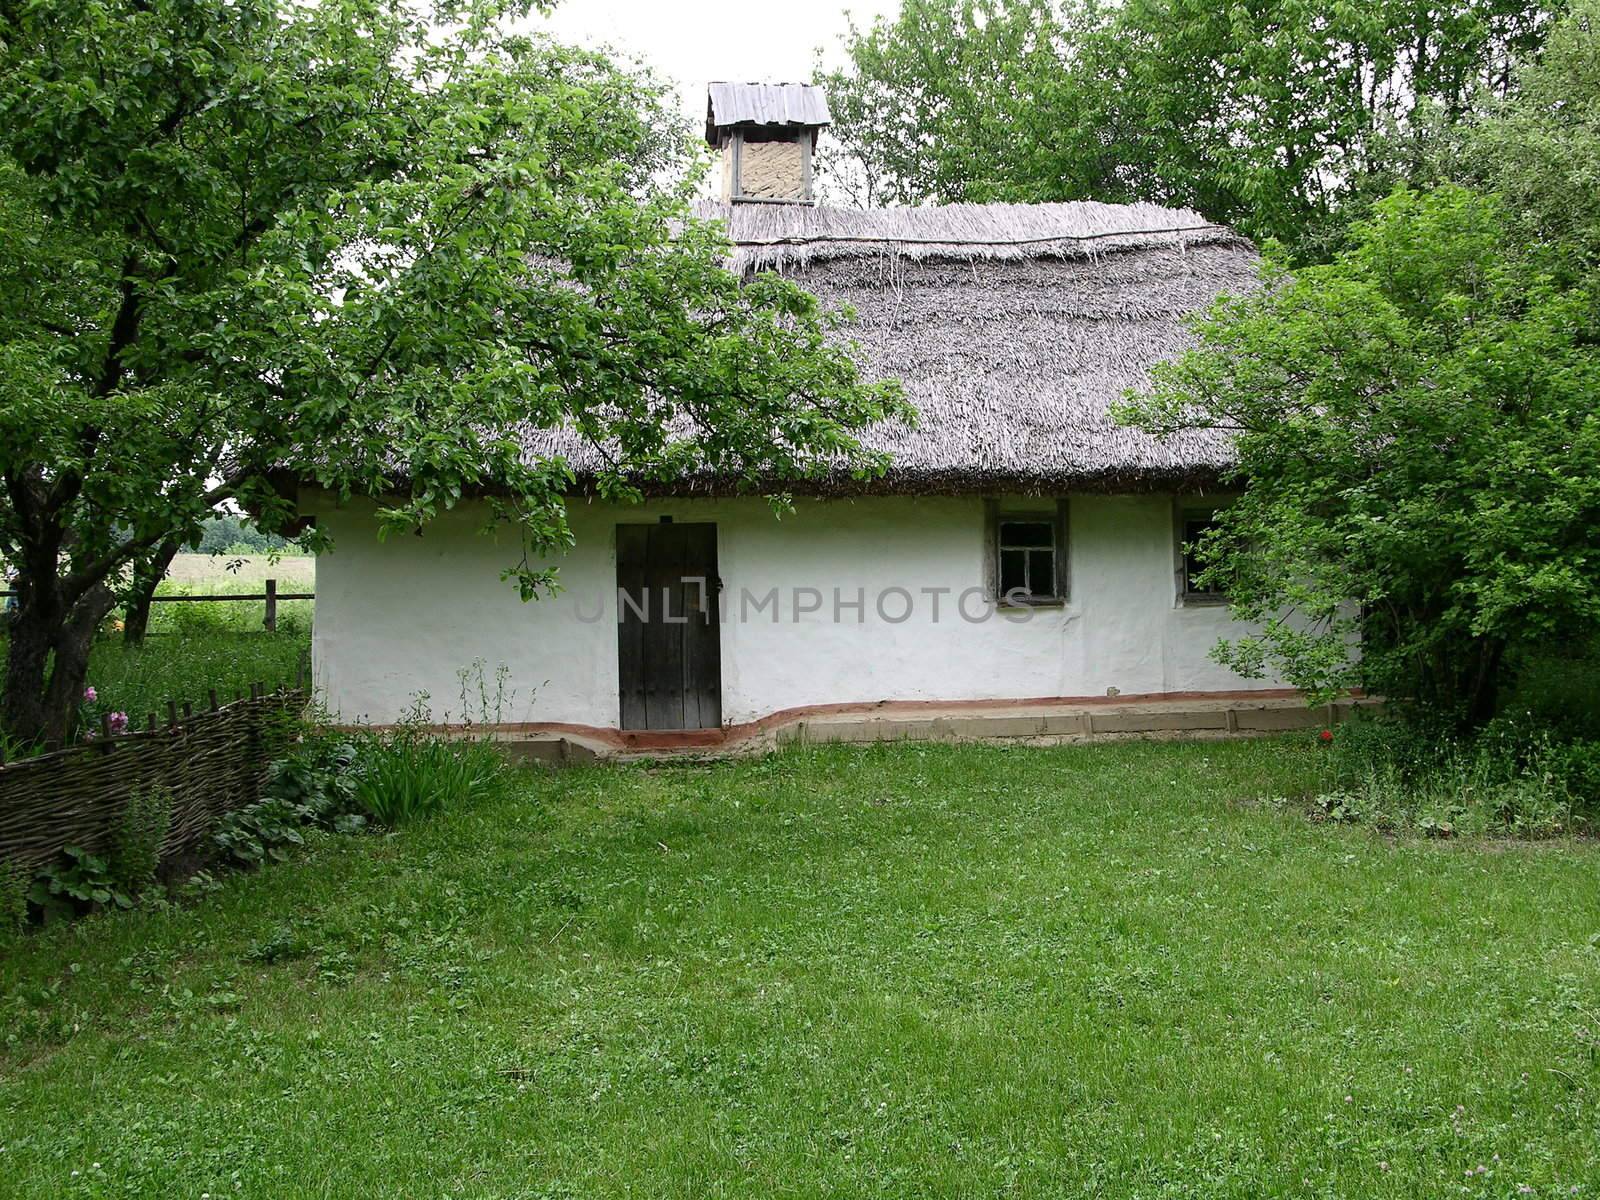 fragment of Ukrainian  life under the open air in the Pirogovo village.